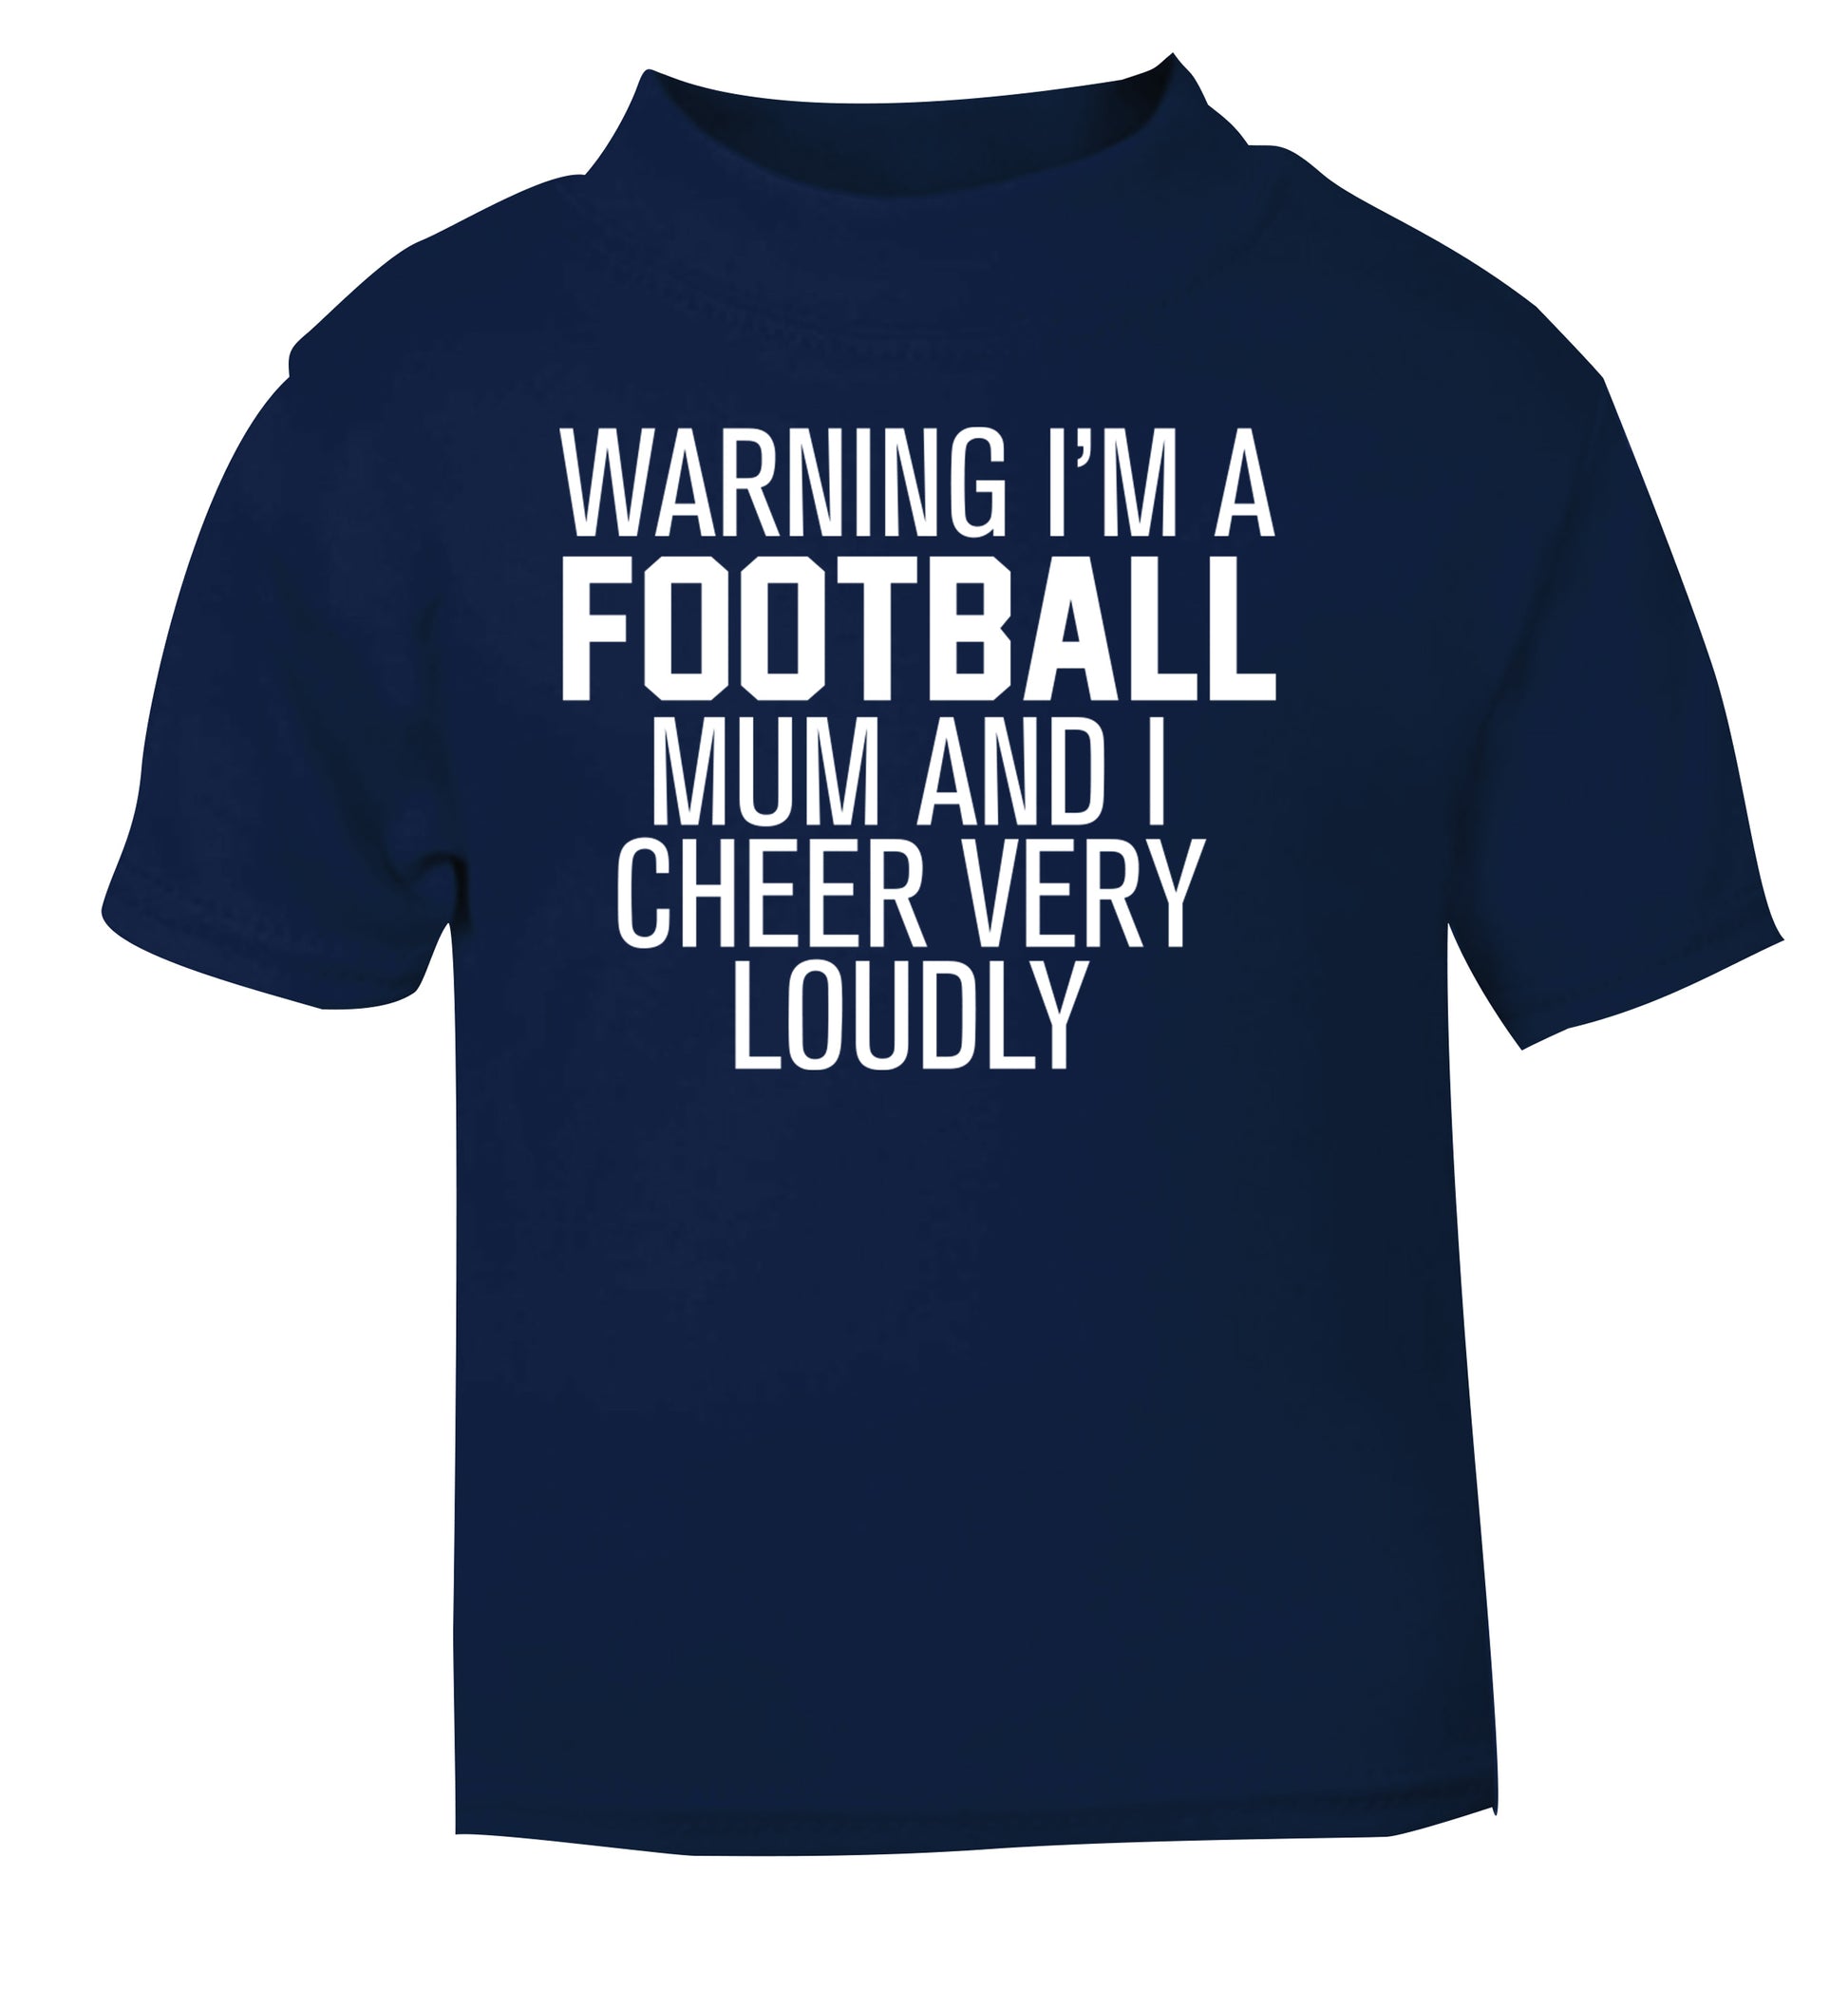 Warning I'm a football mum and I cheer very loudly navy Baby Toddler Tshirt 2 Years